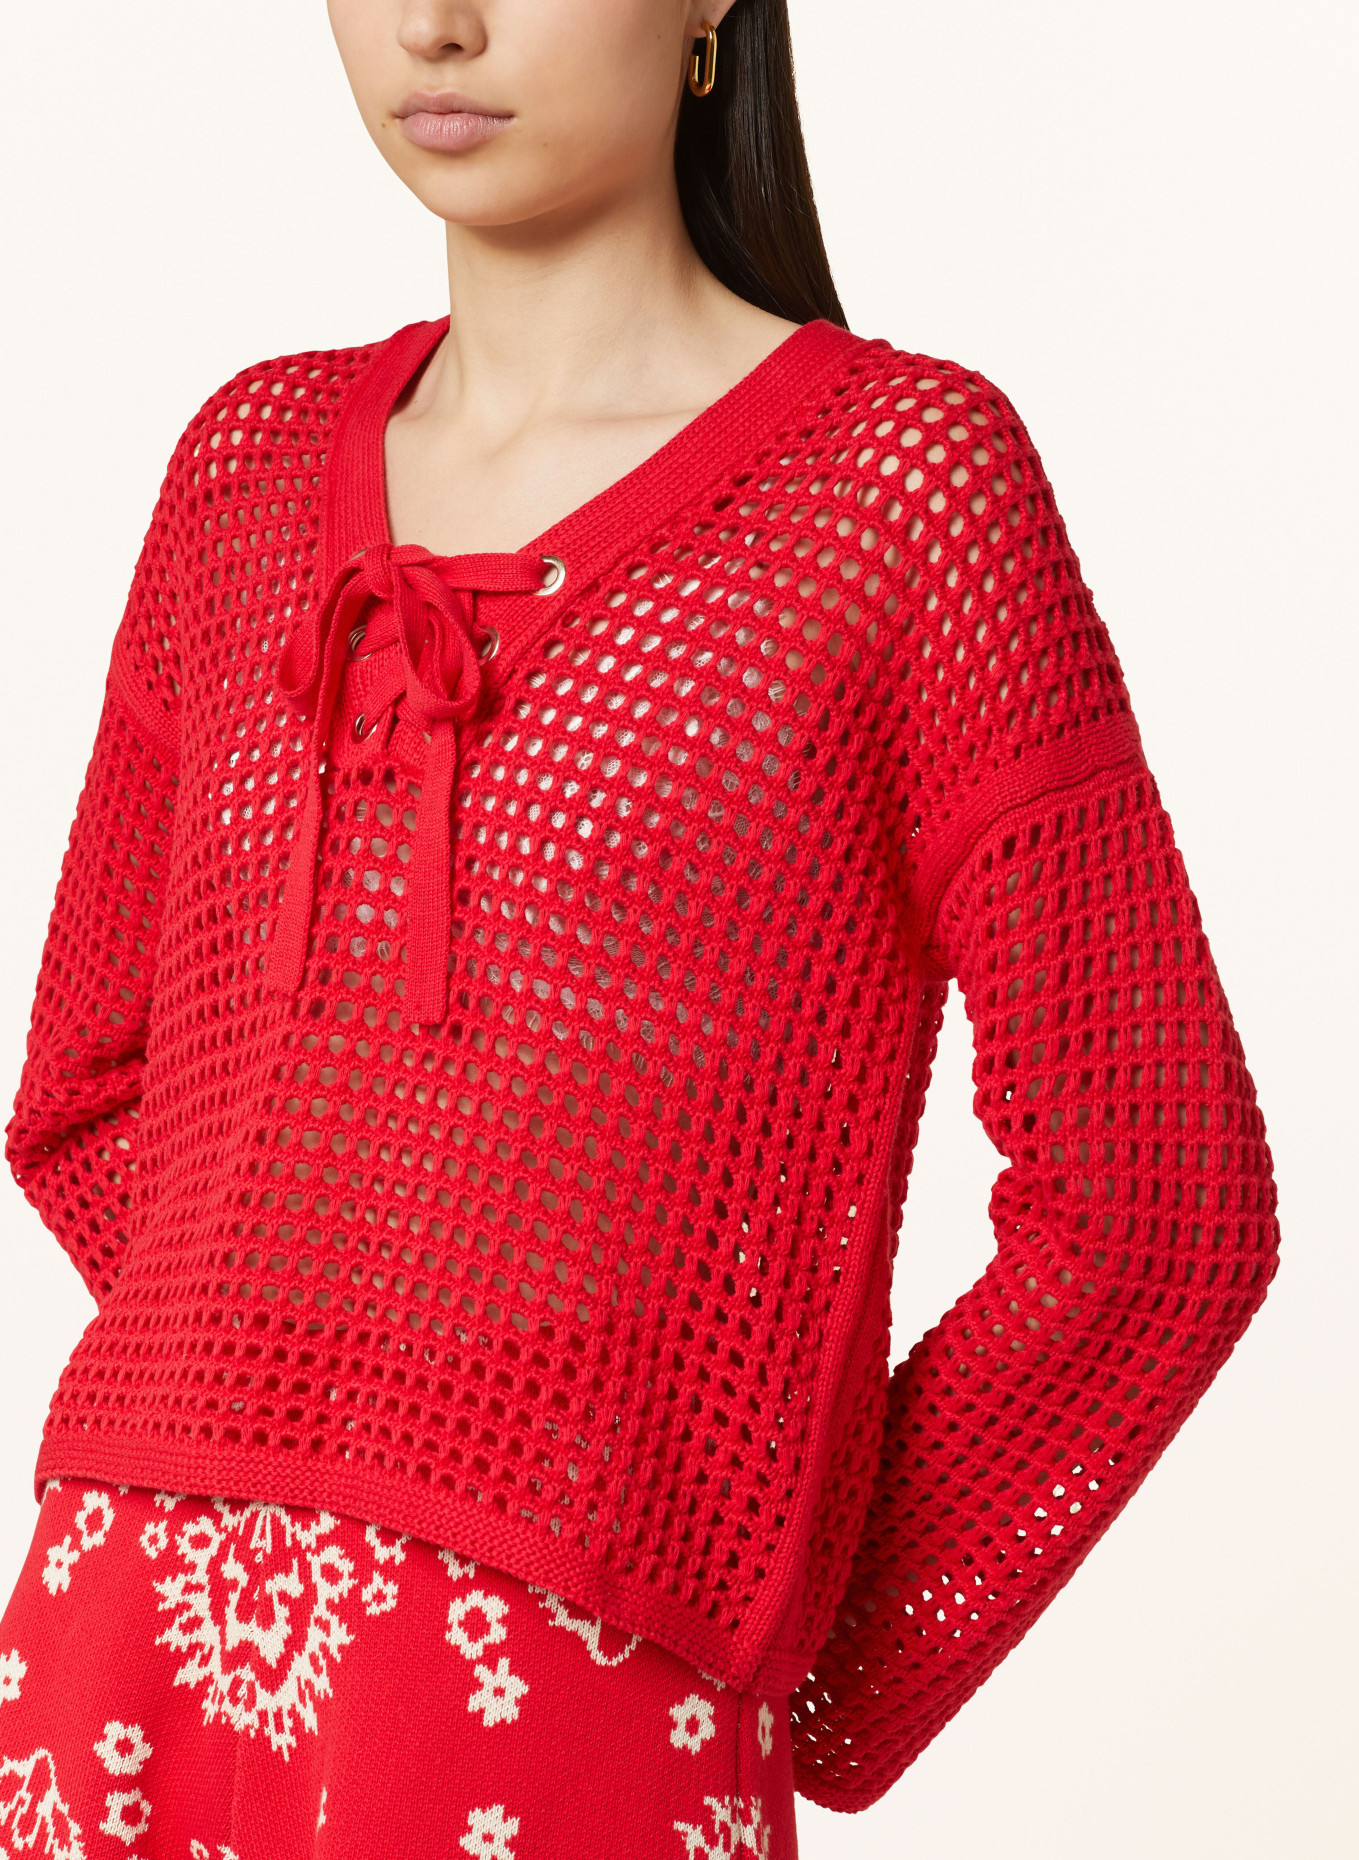 LIU JO Sweater, Color: 81761 Cherry red (Image 4)